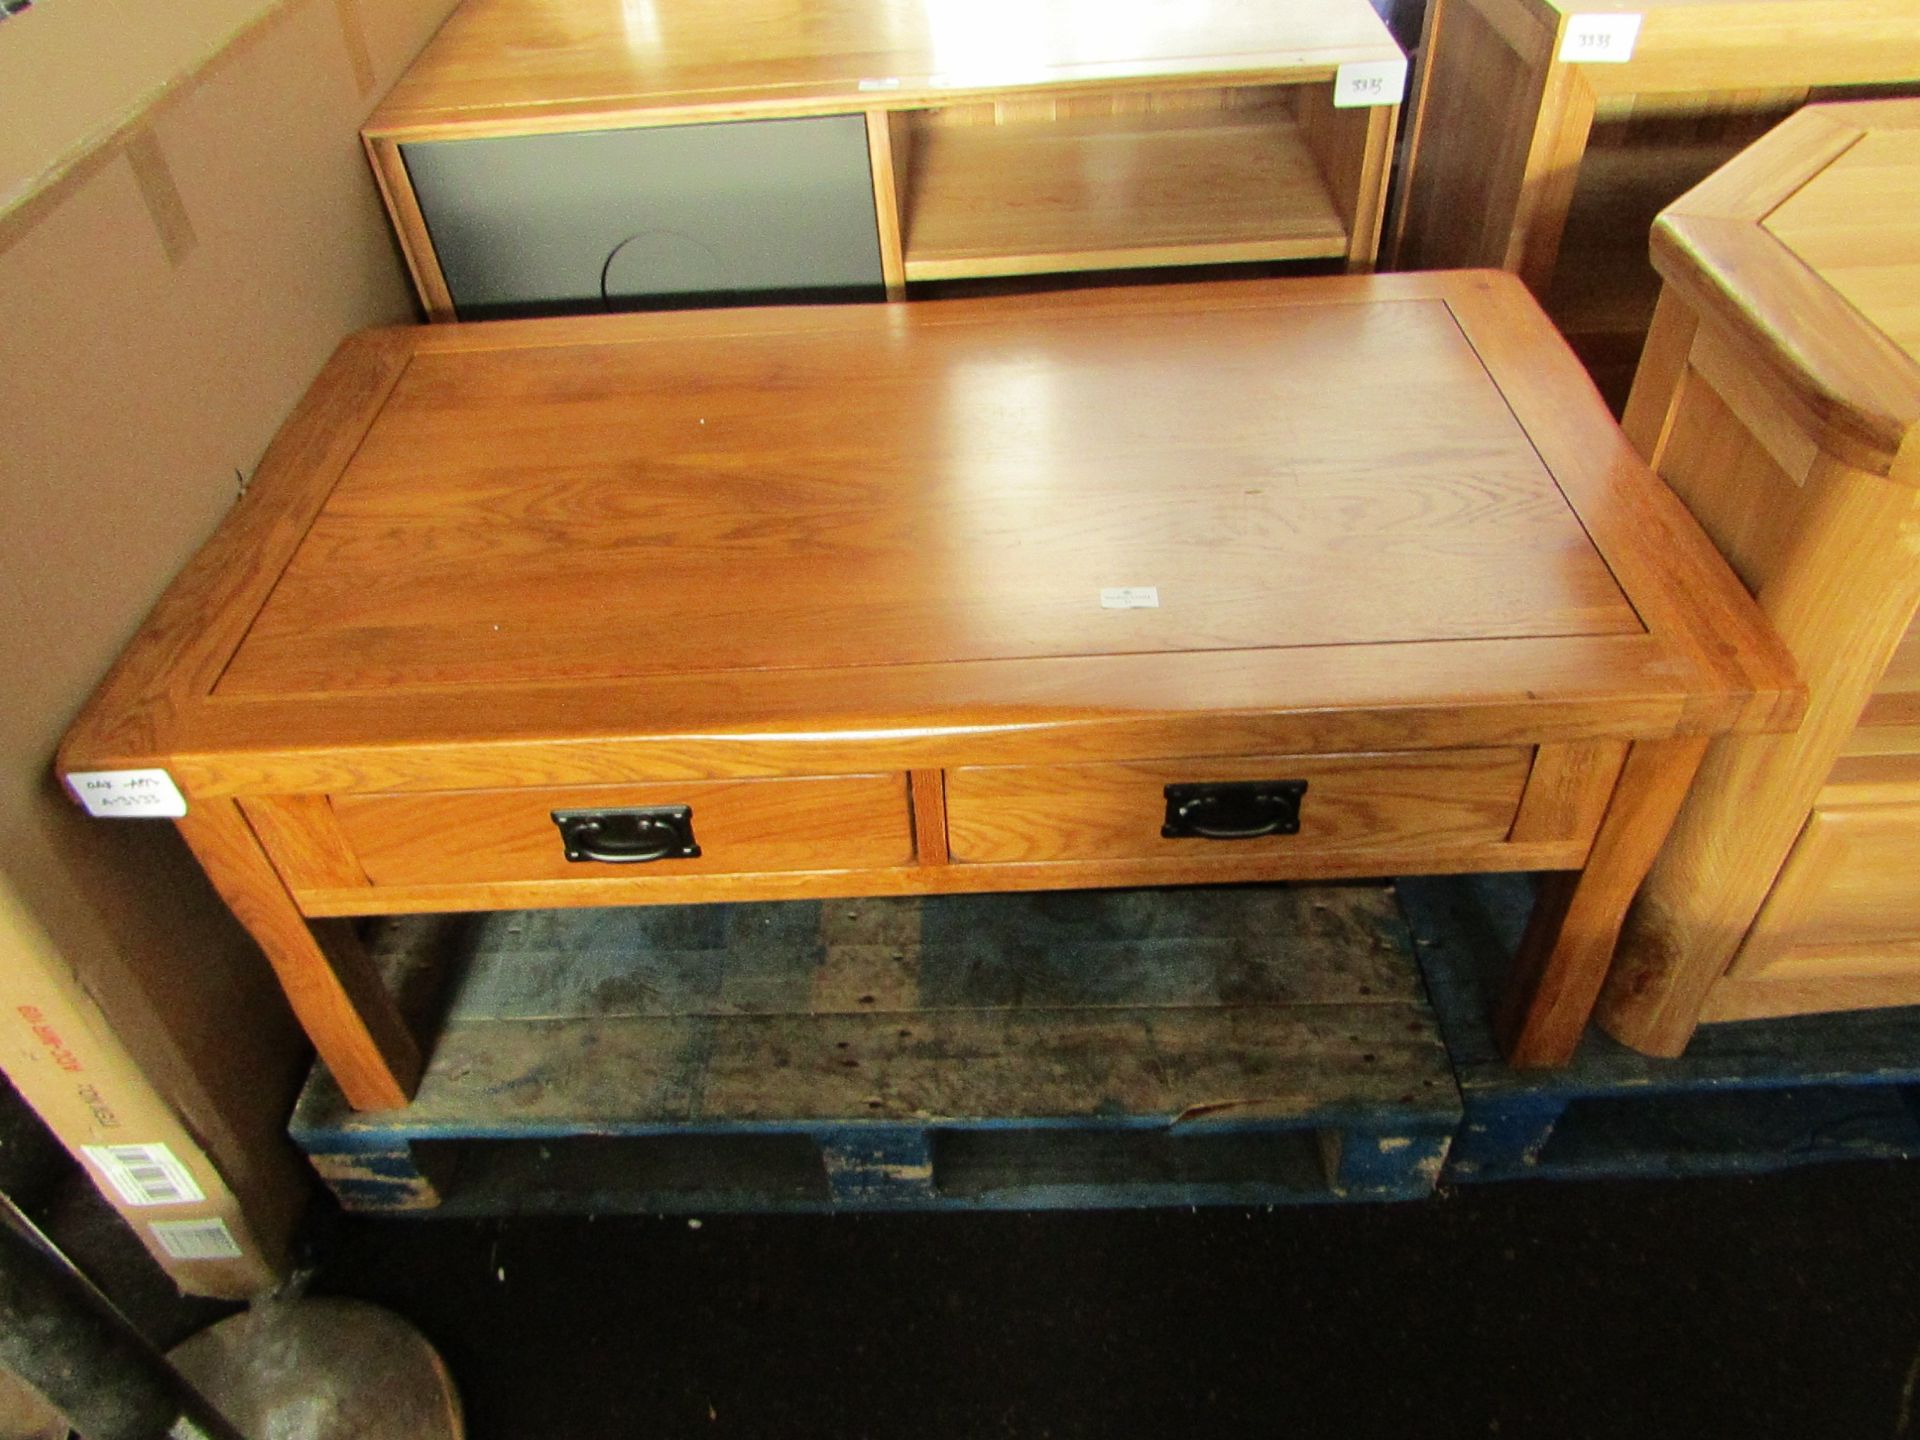 Oak Furnitureland Original Rustic Solid Oak 4 Drawer Storage Coffee Table RRP Â£219.99 This Rustic